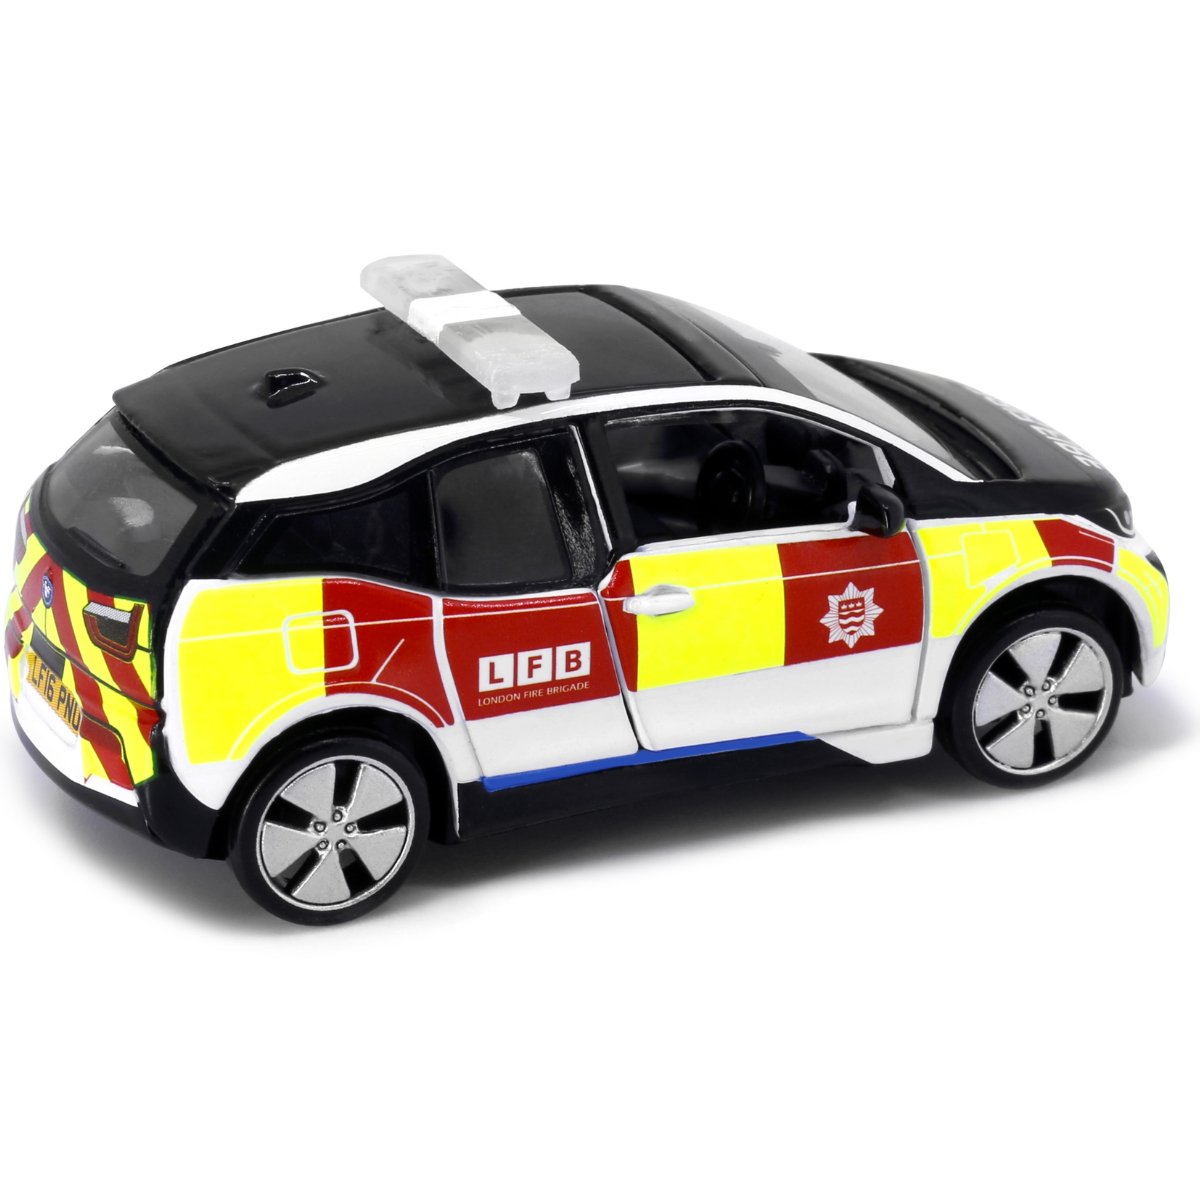 Tiny Models UK13 BMW i3 UK London Fire Brigade Patrol Car (1:64 Scale) - Phillips Hobbies